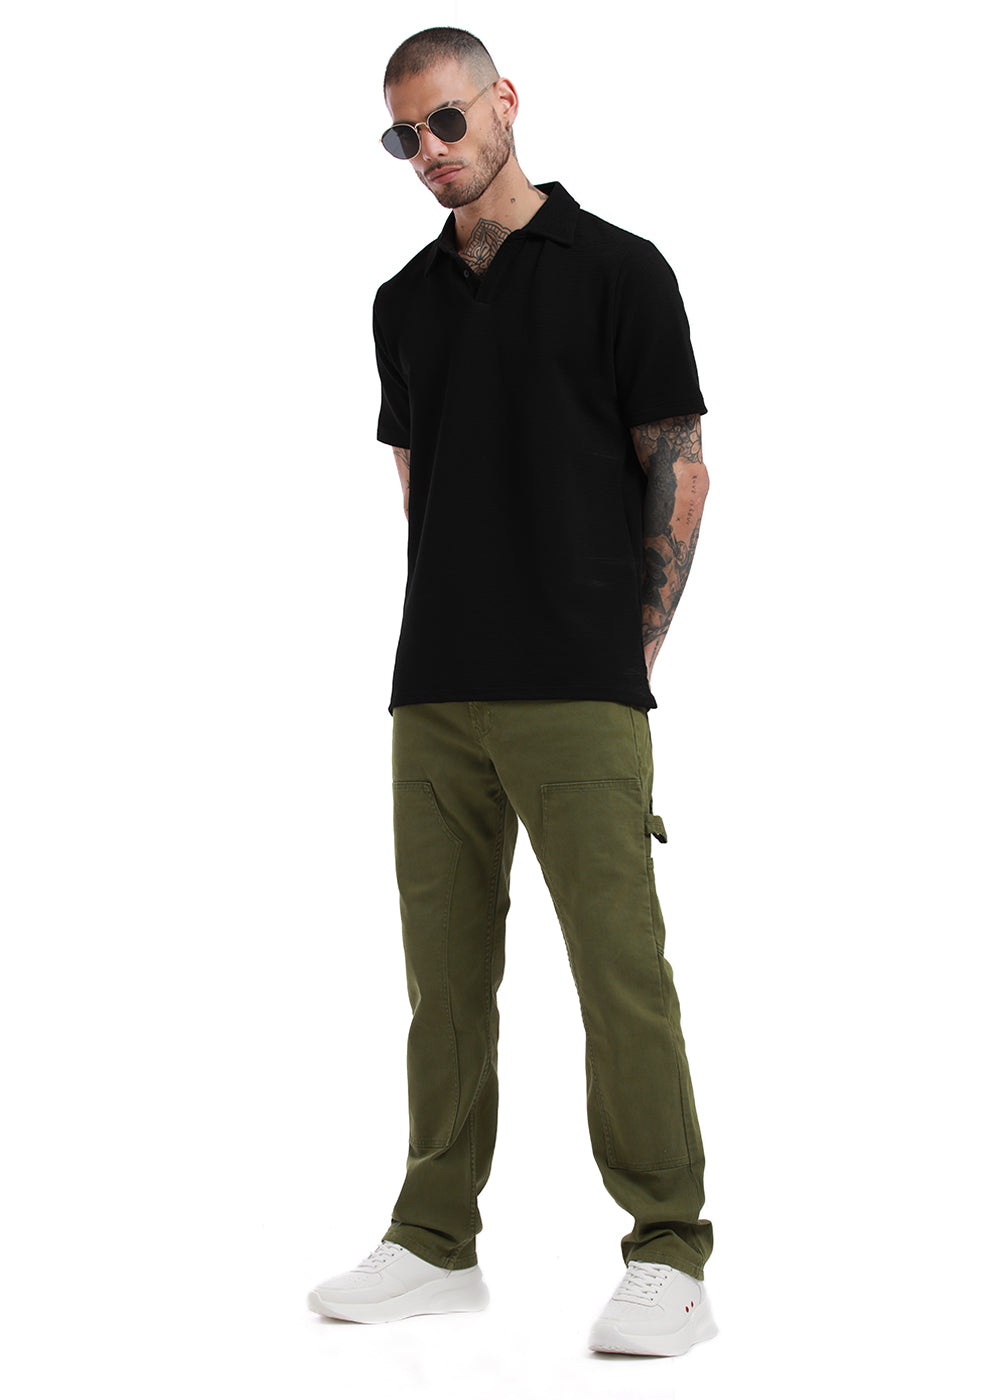 Buy Olive Green & Black Track Pants for Men by Teamspirit Online | Ajio.com